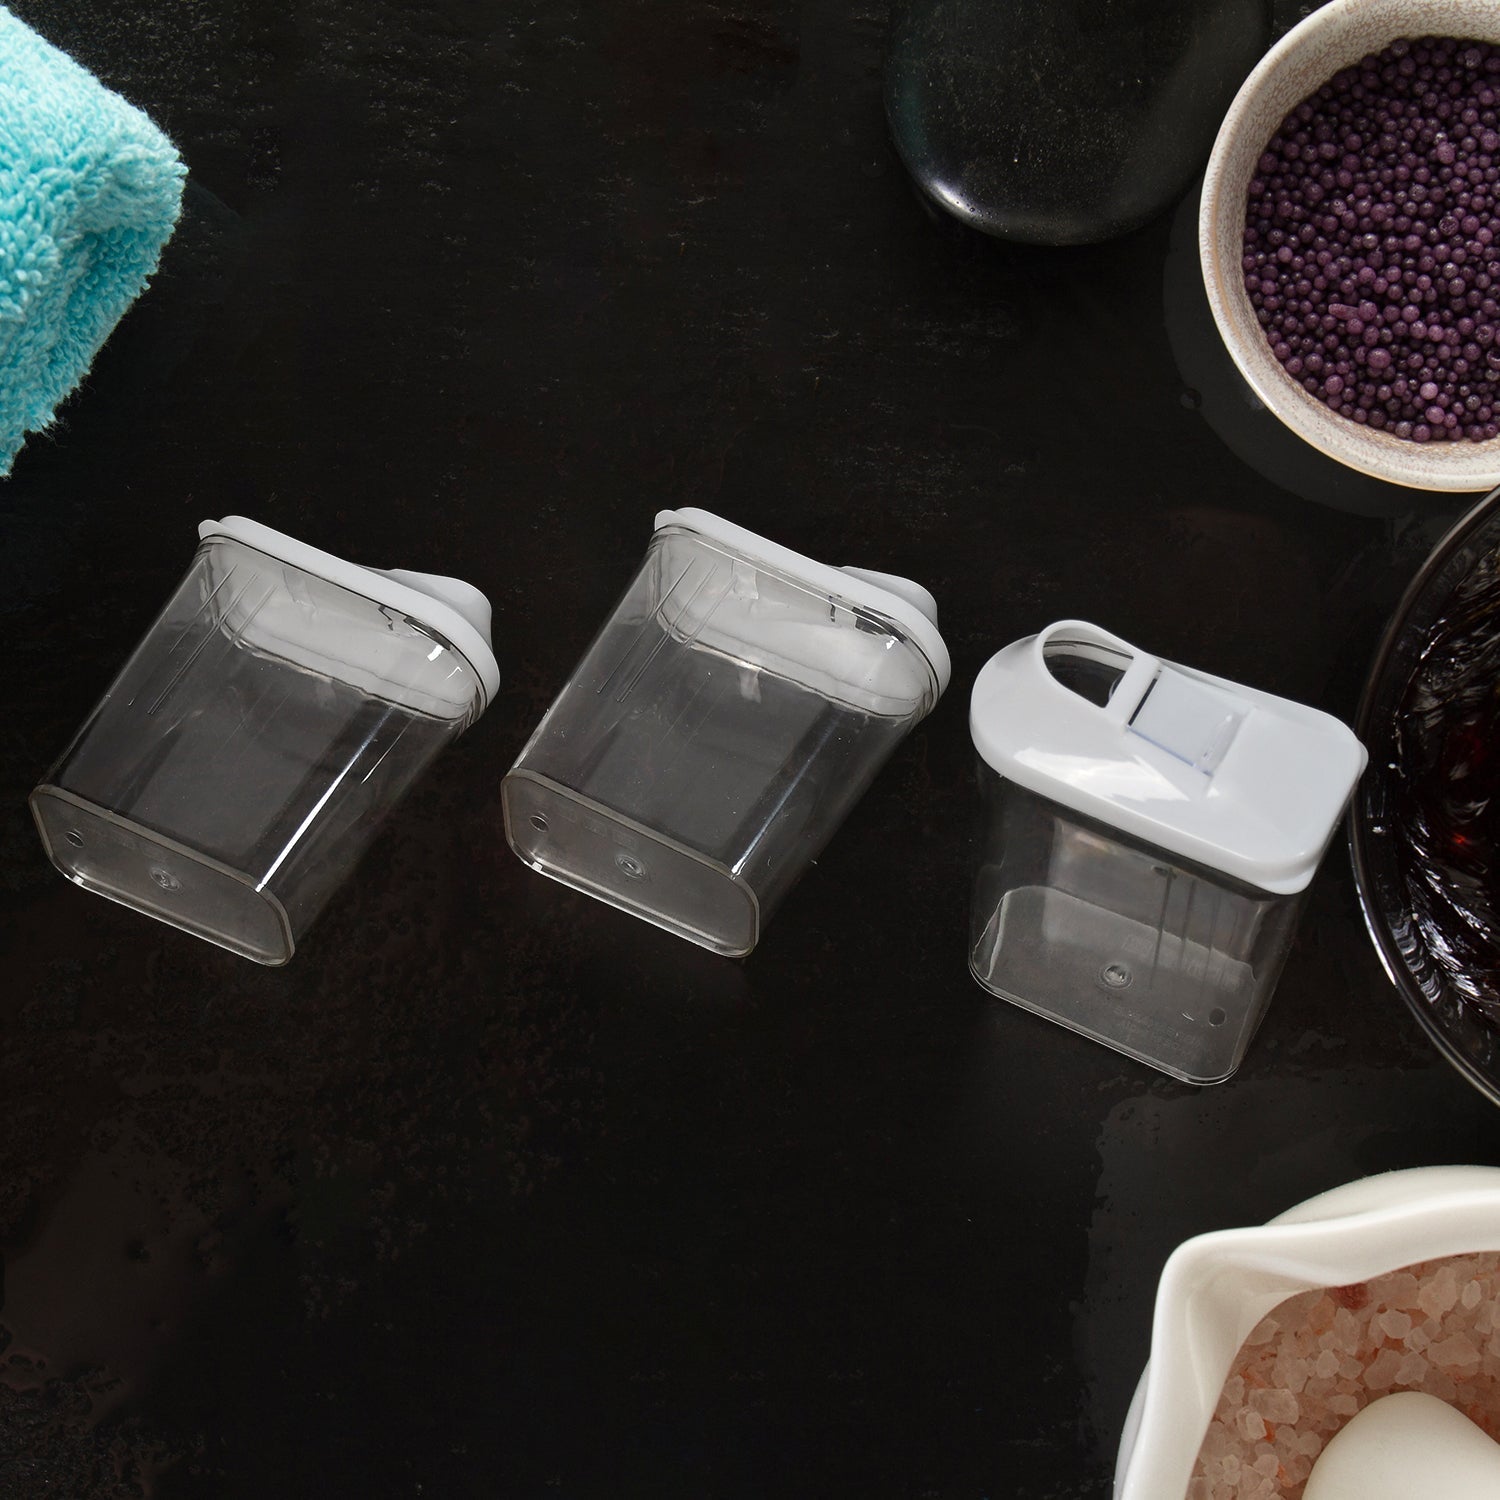 2782 Kitchen Storage Jars & Container Set 3pc , Transparent Jar Set For home & Kitchen Use DeoDap